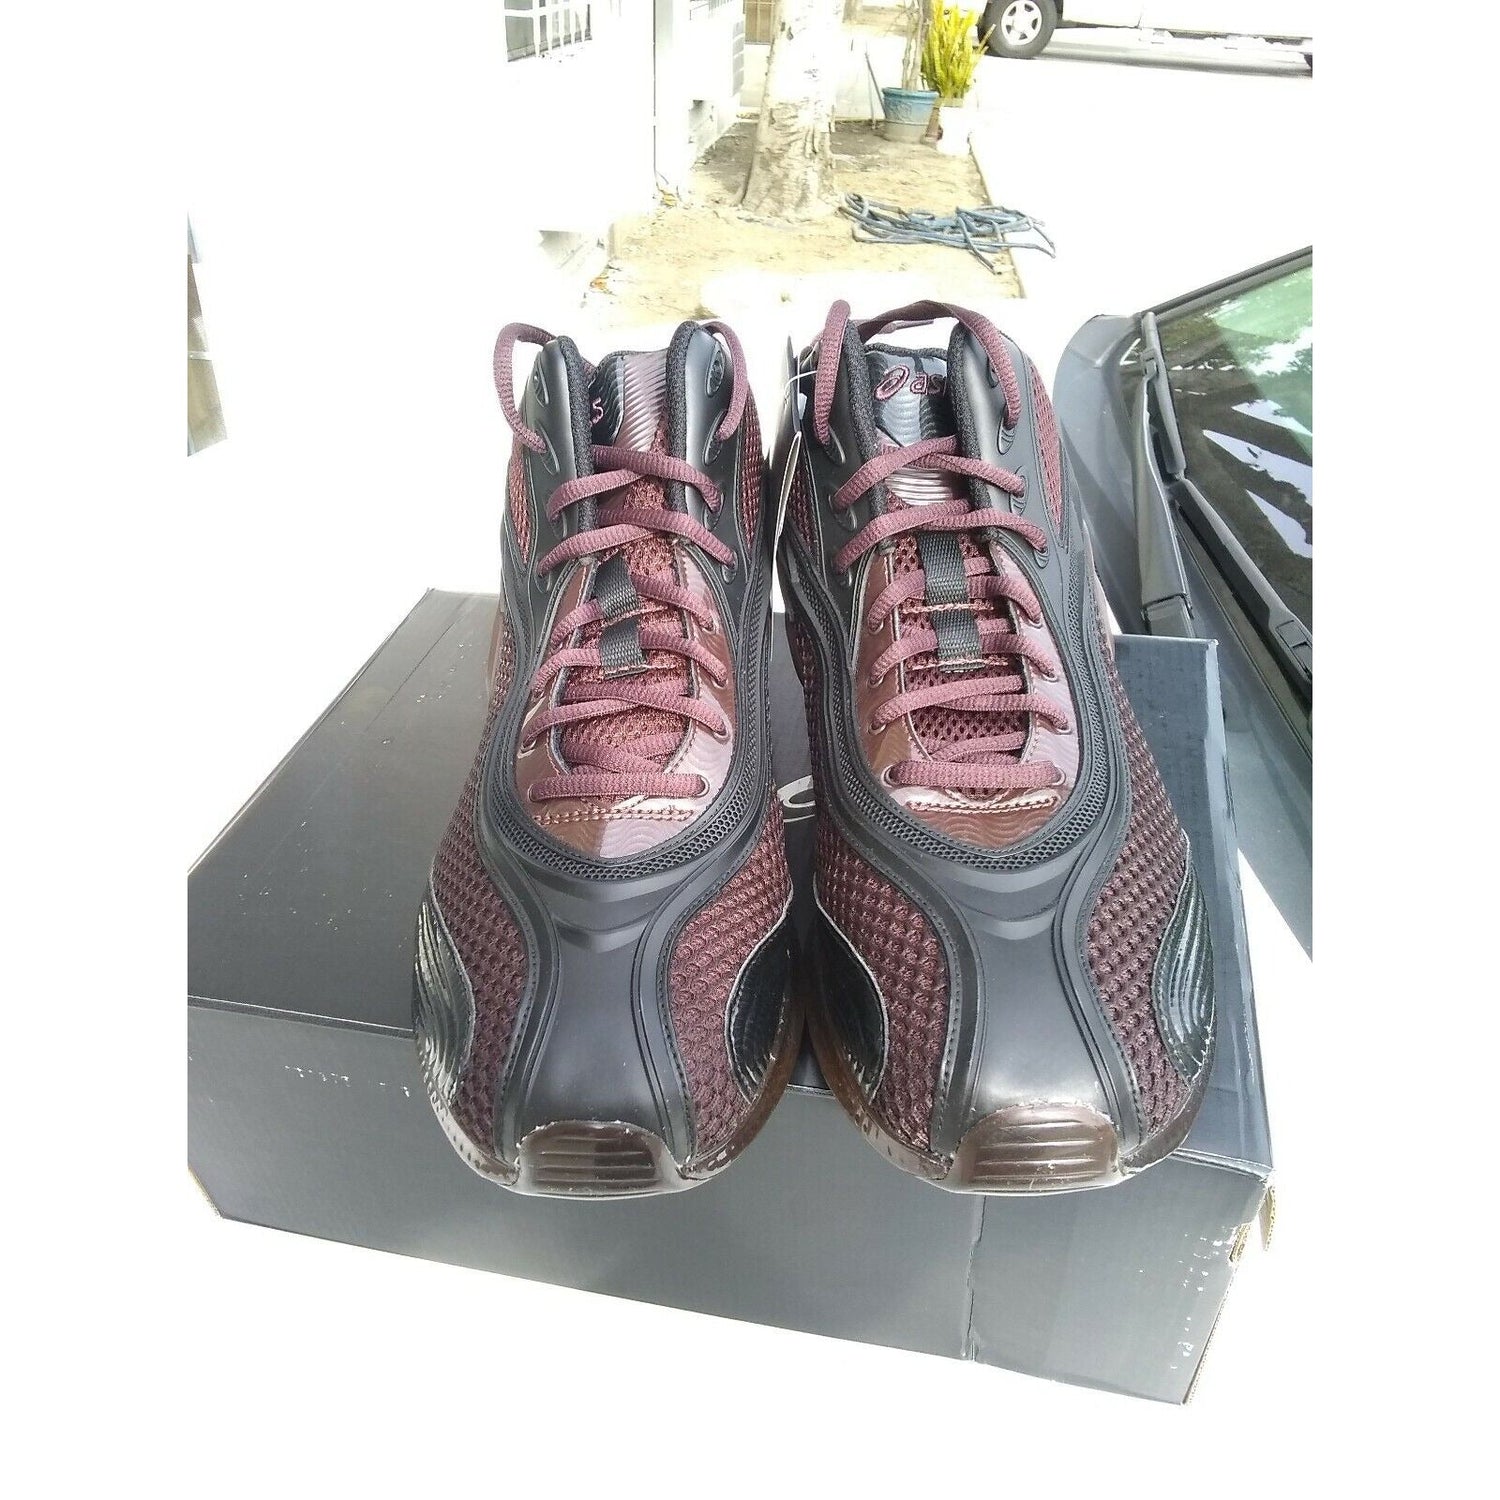 Asics Men's Gel Sokat Infinity 2 Running Shoes Coffee Black Size 9 US - Classic Fashion Deals